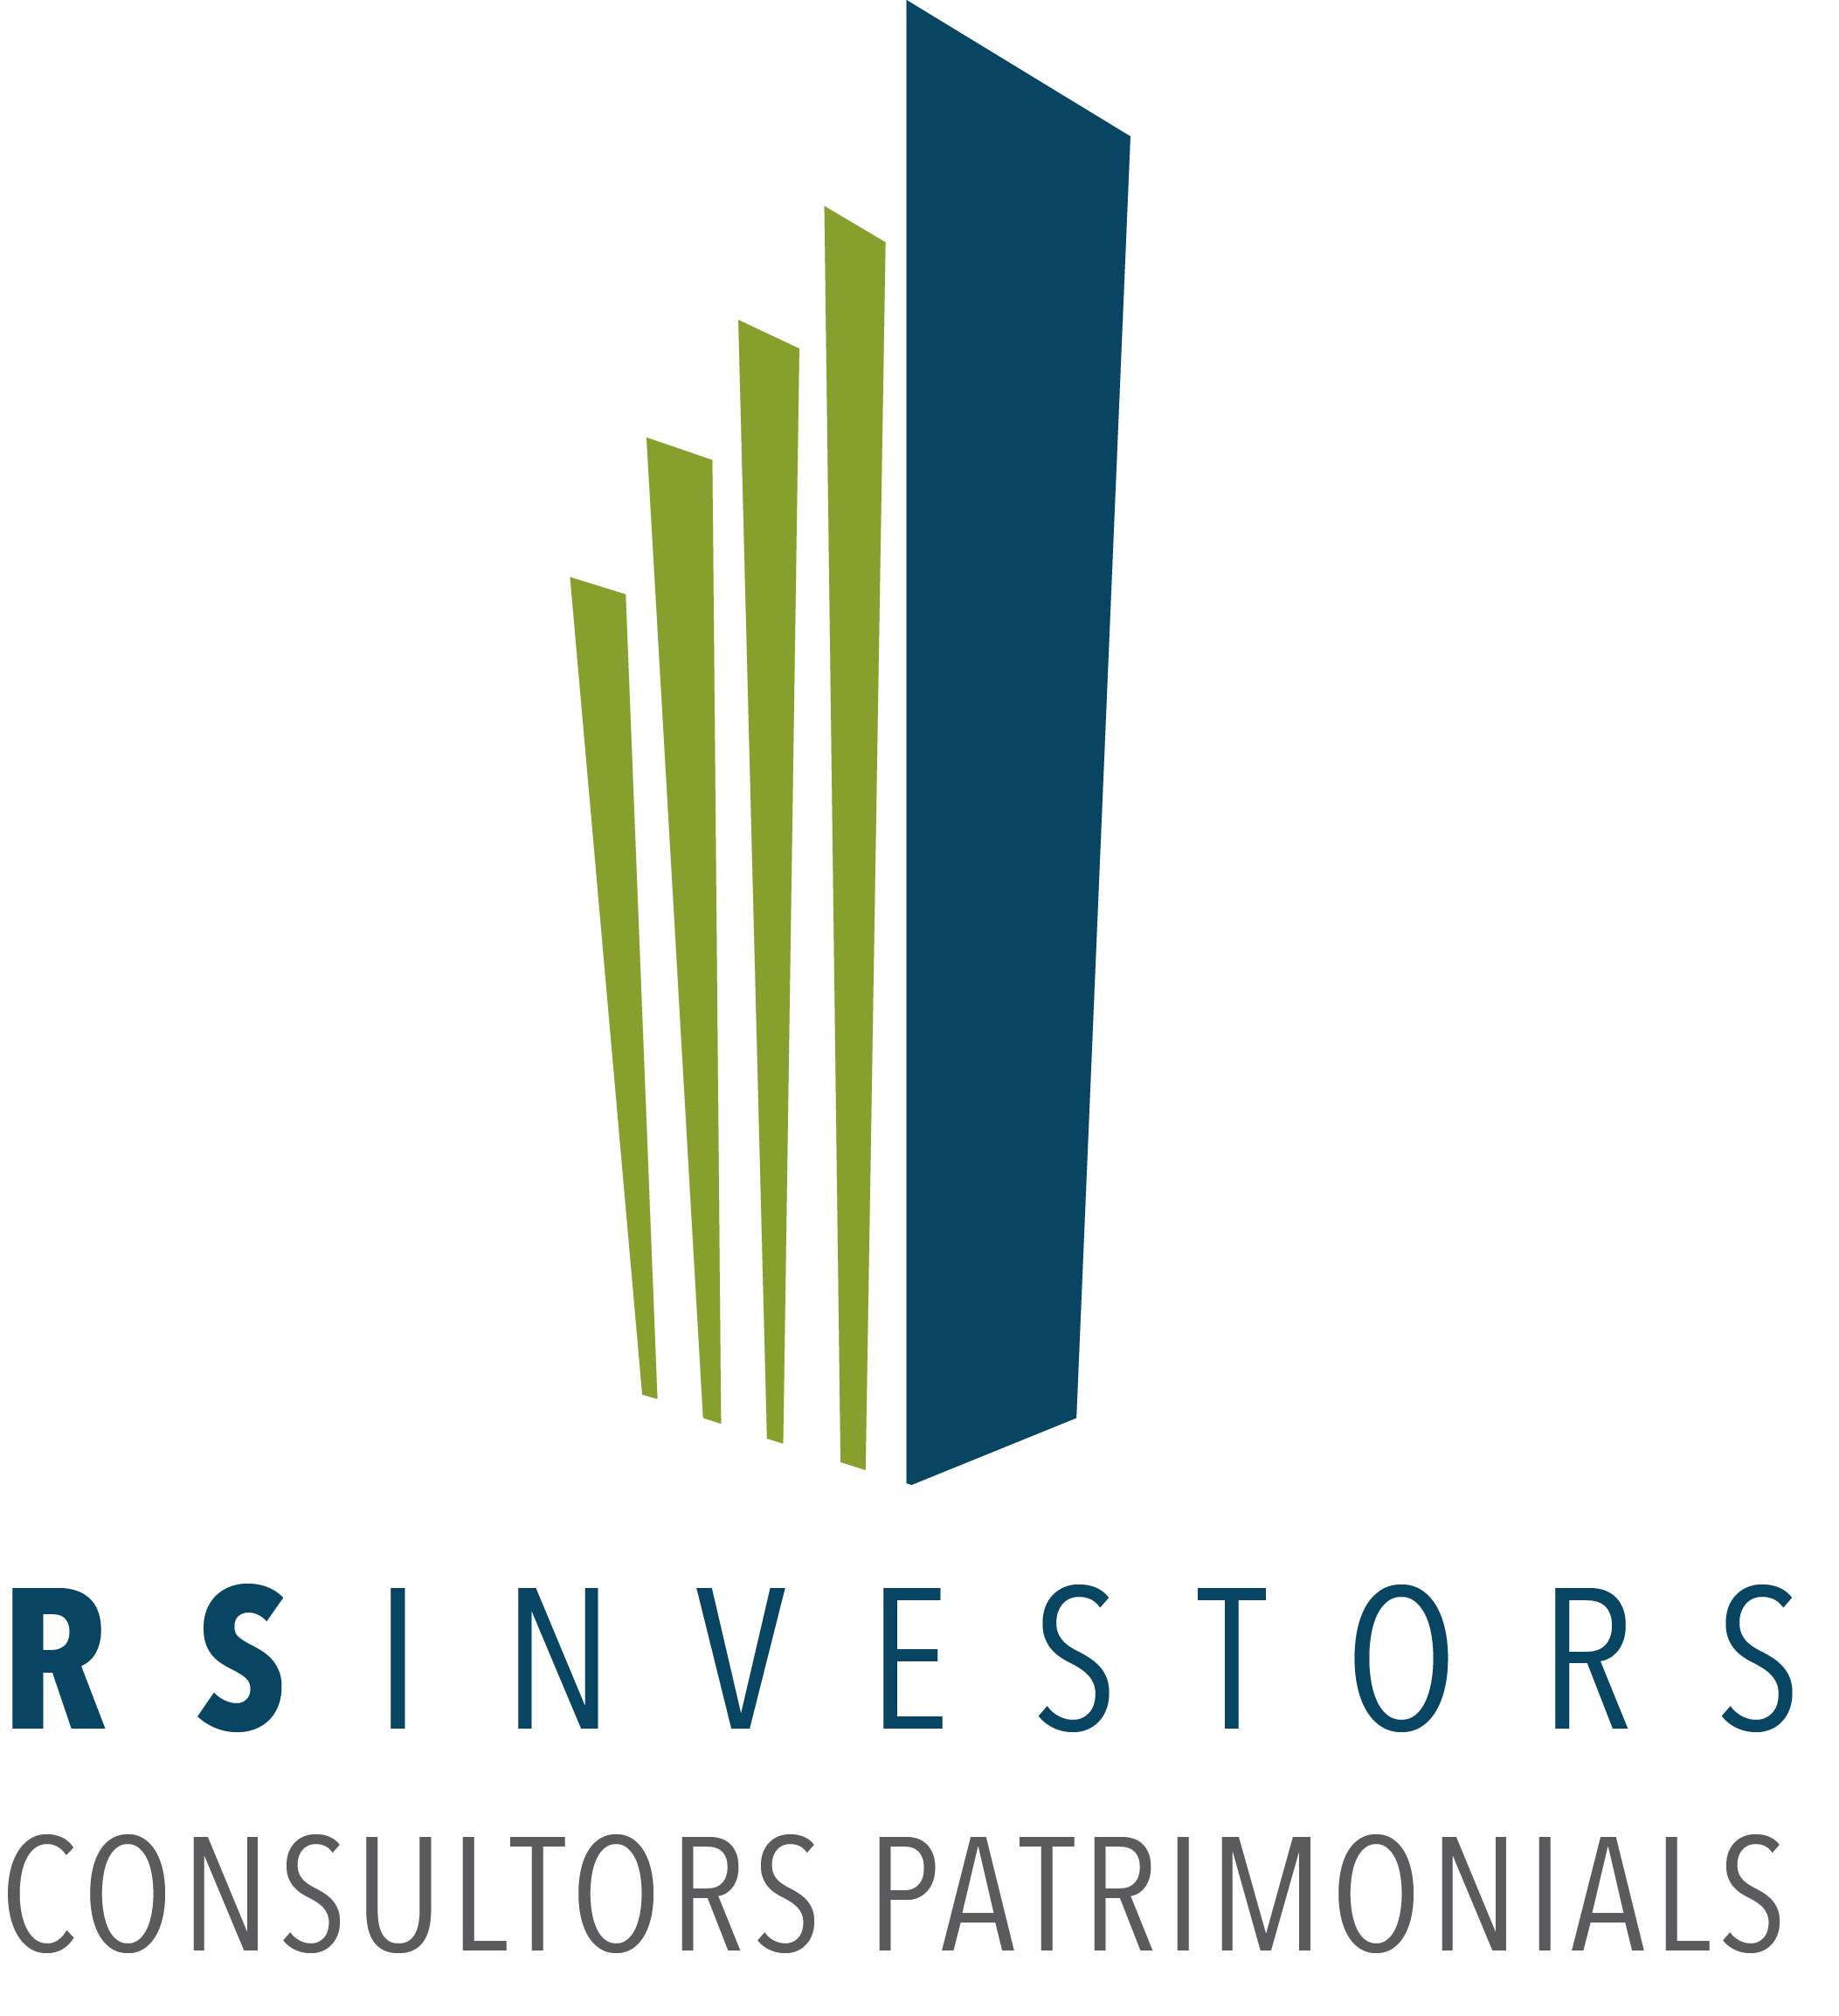 RS Investors Consultors Patrimonials